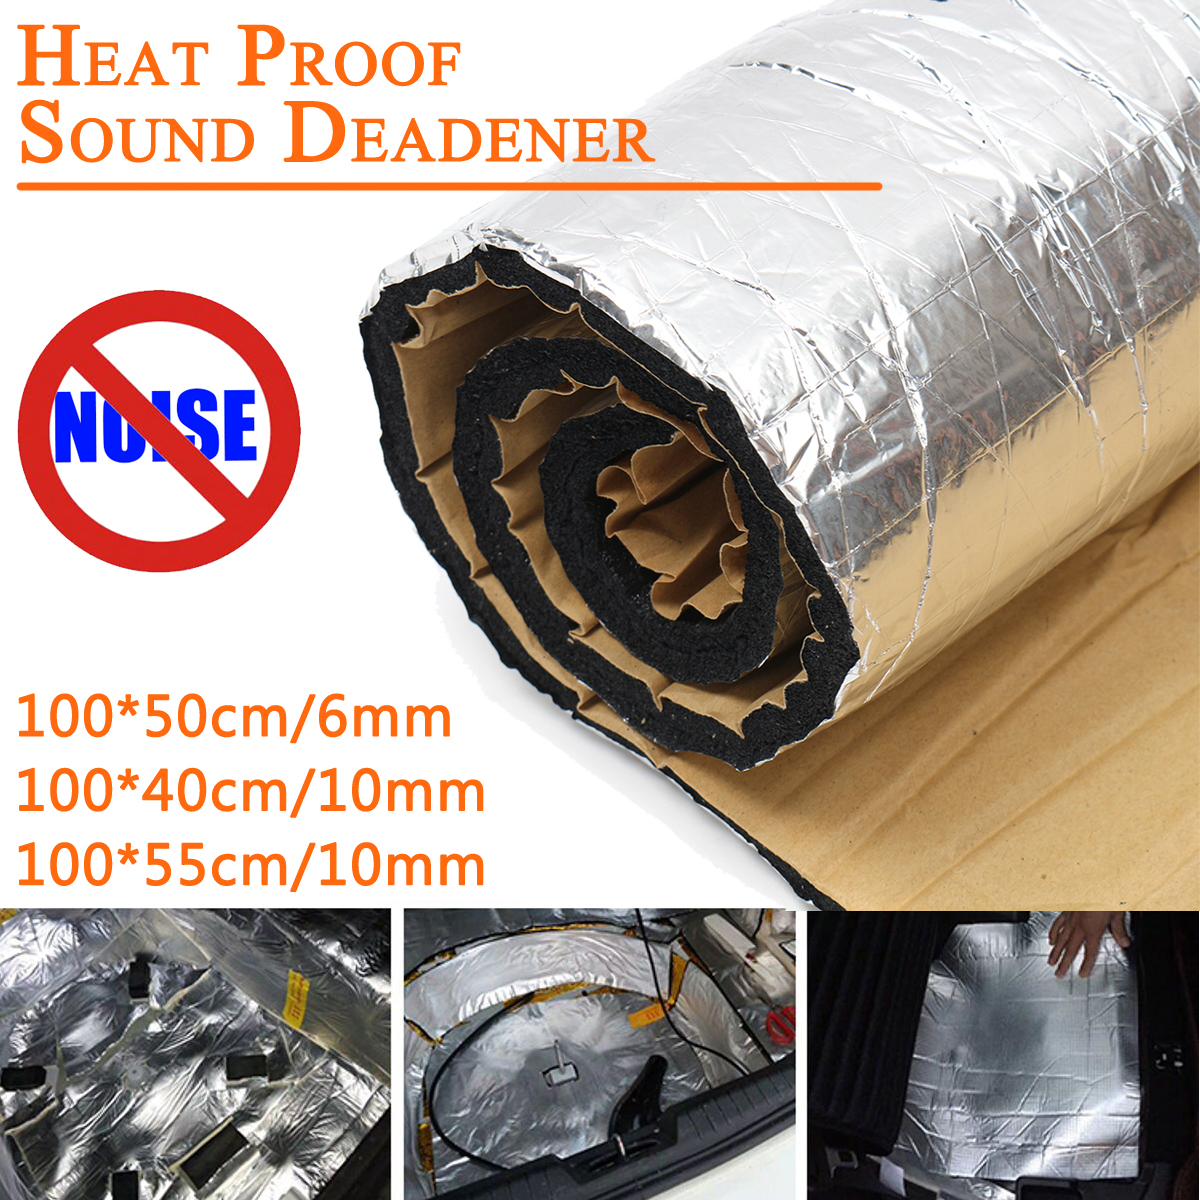 heat proof sound insulation